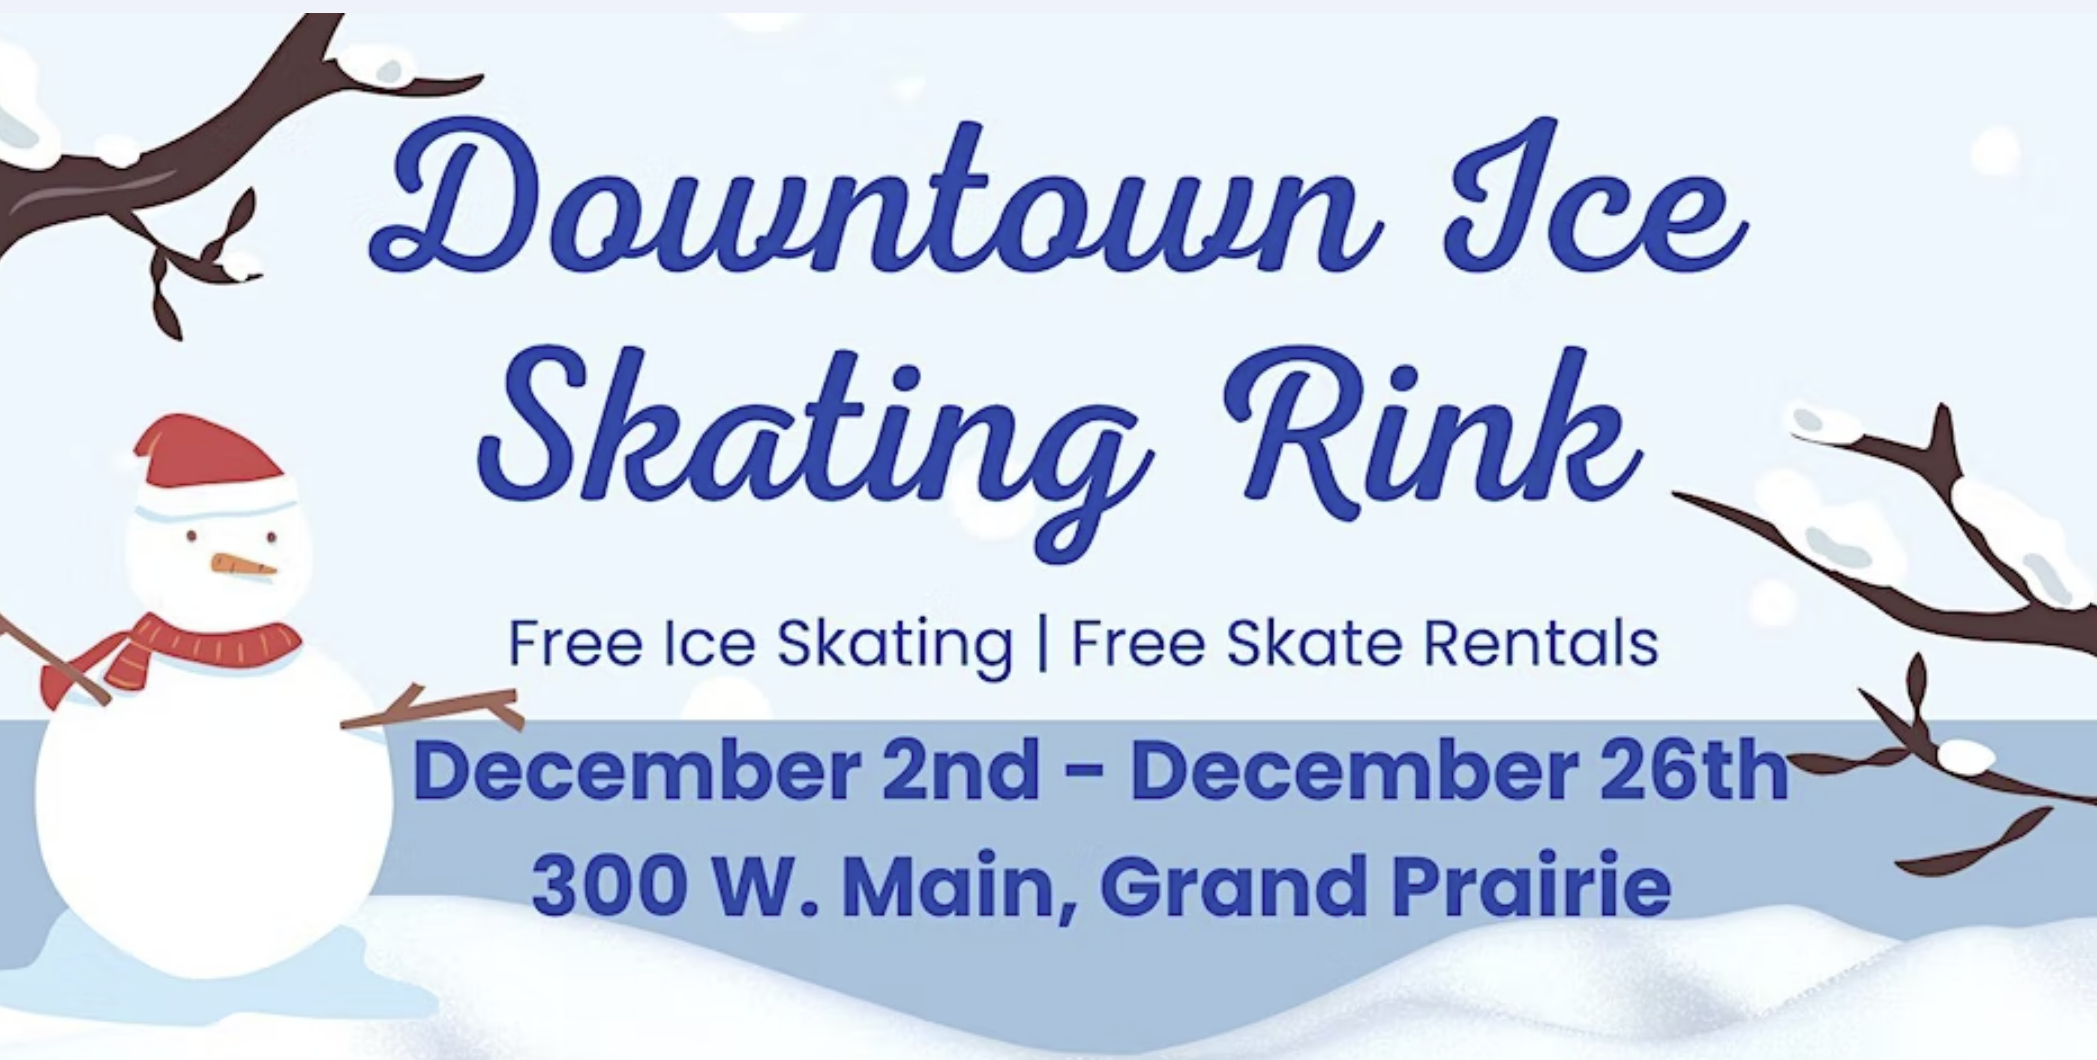 Grand Prairie ice skating rink